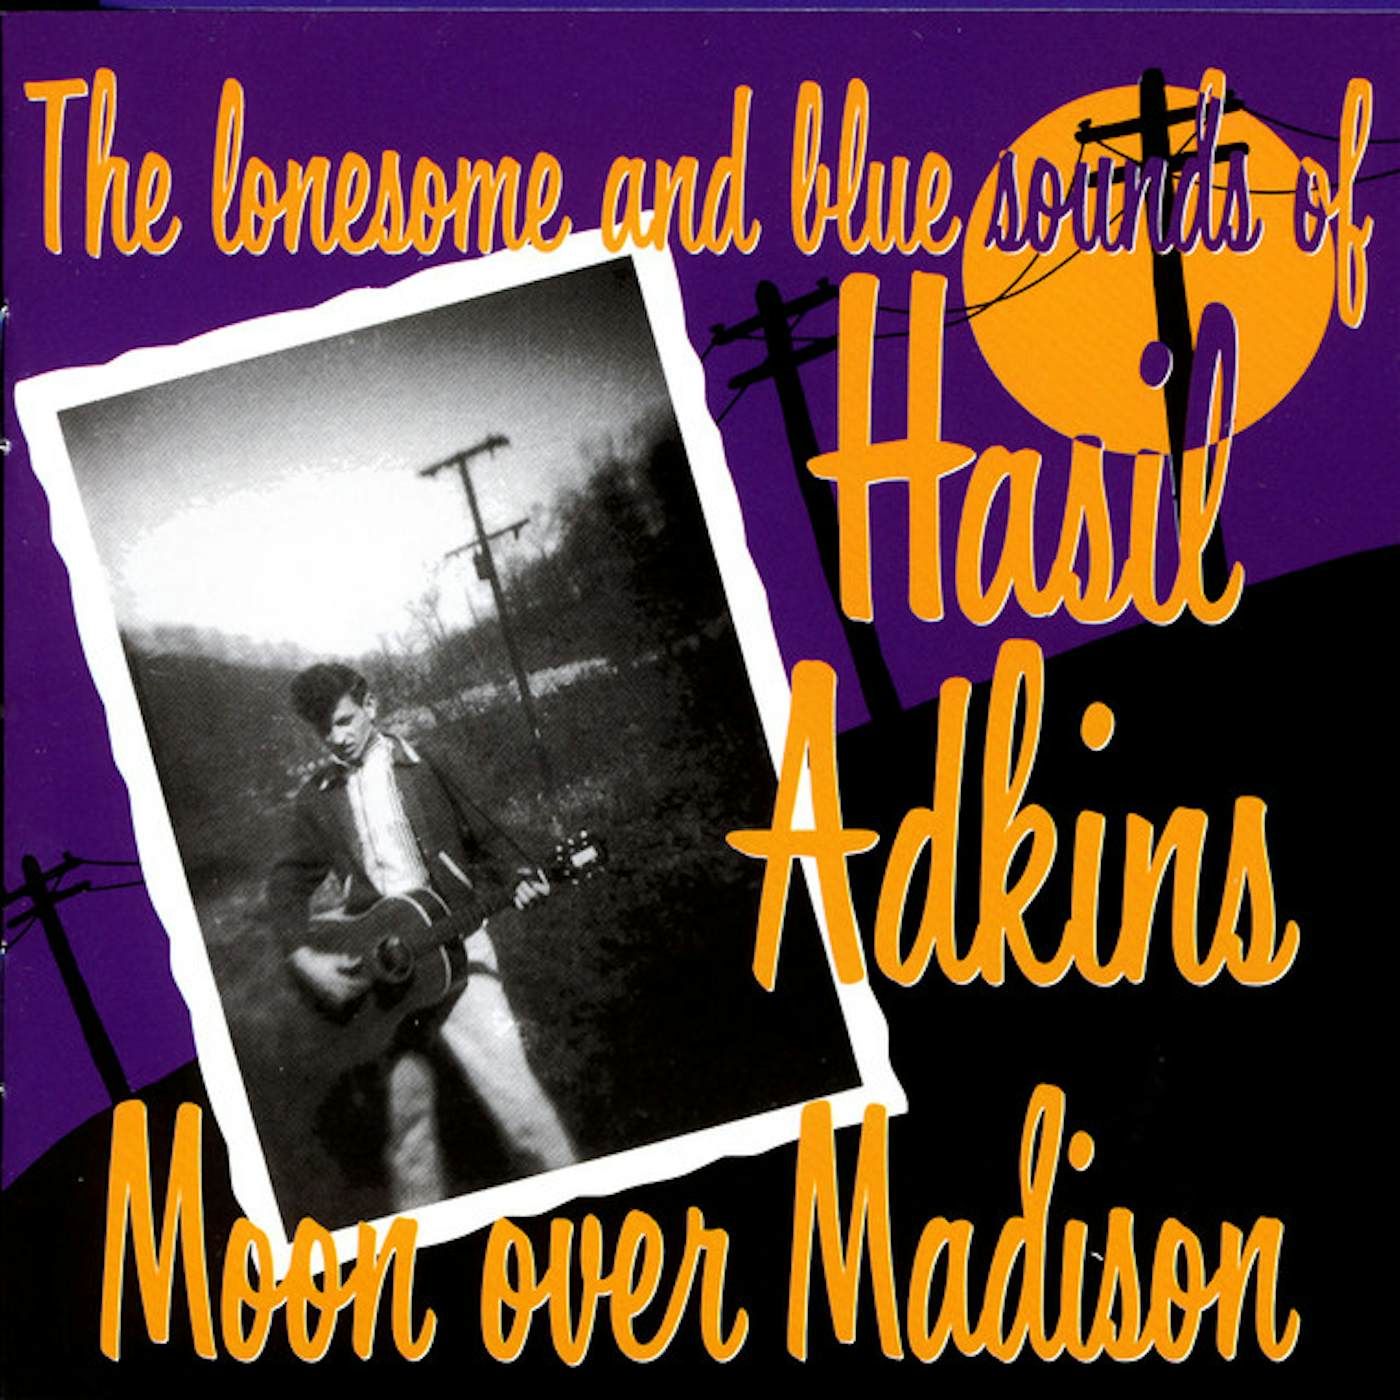 Hasil Adkins Moon Over Madison Vinyl Record